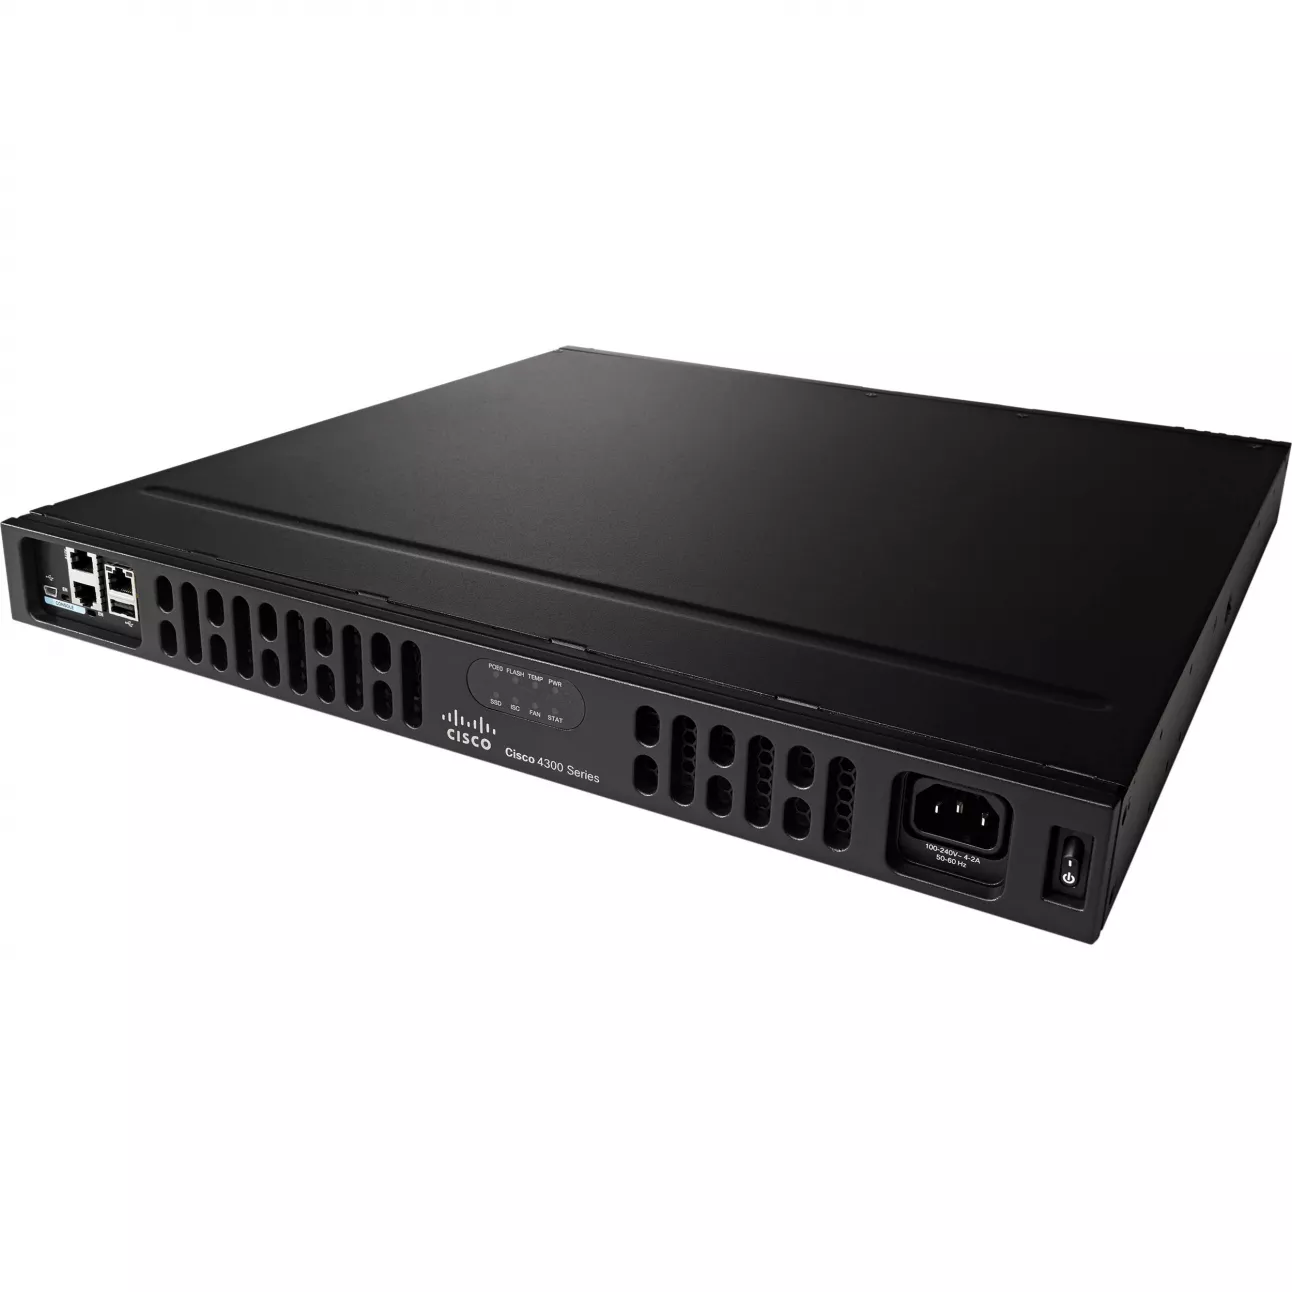 Cisco ISR4331 - Маршрутизатор, 1 комбо порт 10/100/1000BaseT/SFP, 1 порт 10/100/1000BaseT, 1 порт SFP, 2 слота NIM, 1 слот ISC, с функционалом Boost Throughput